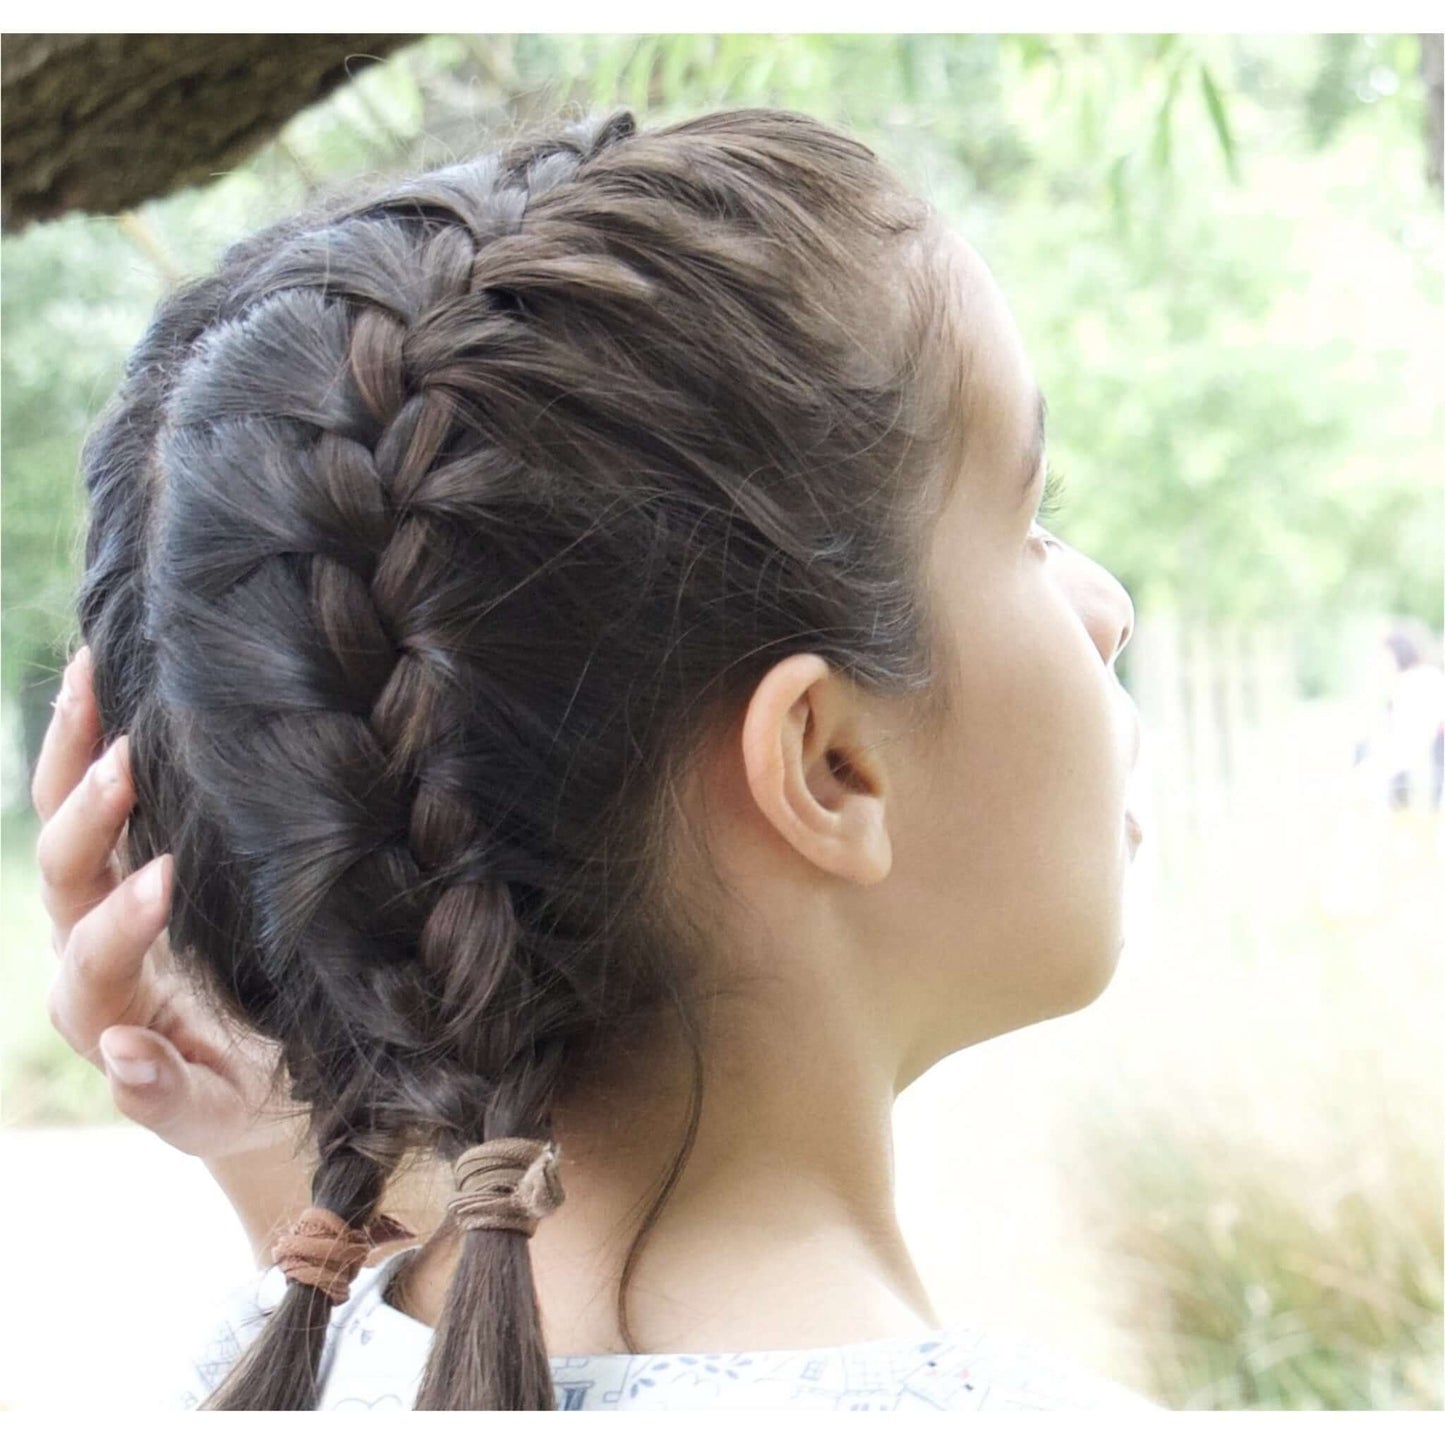 little girl with dark plaited hair outdoors